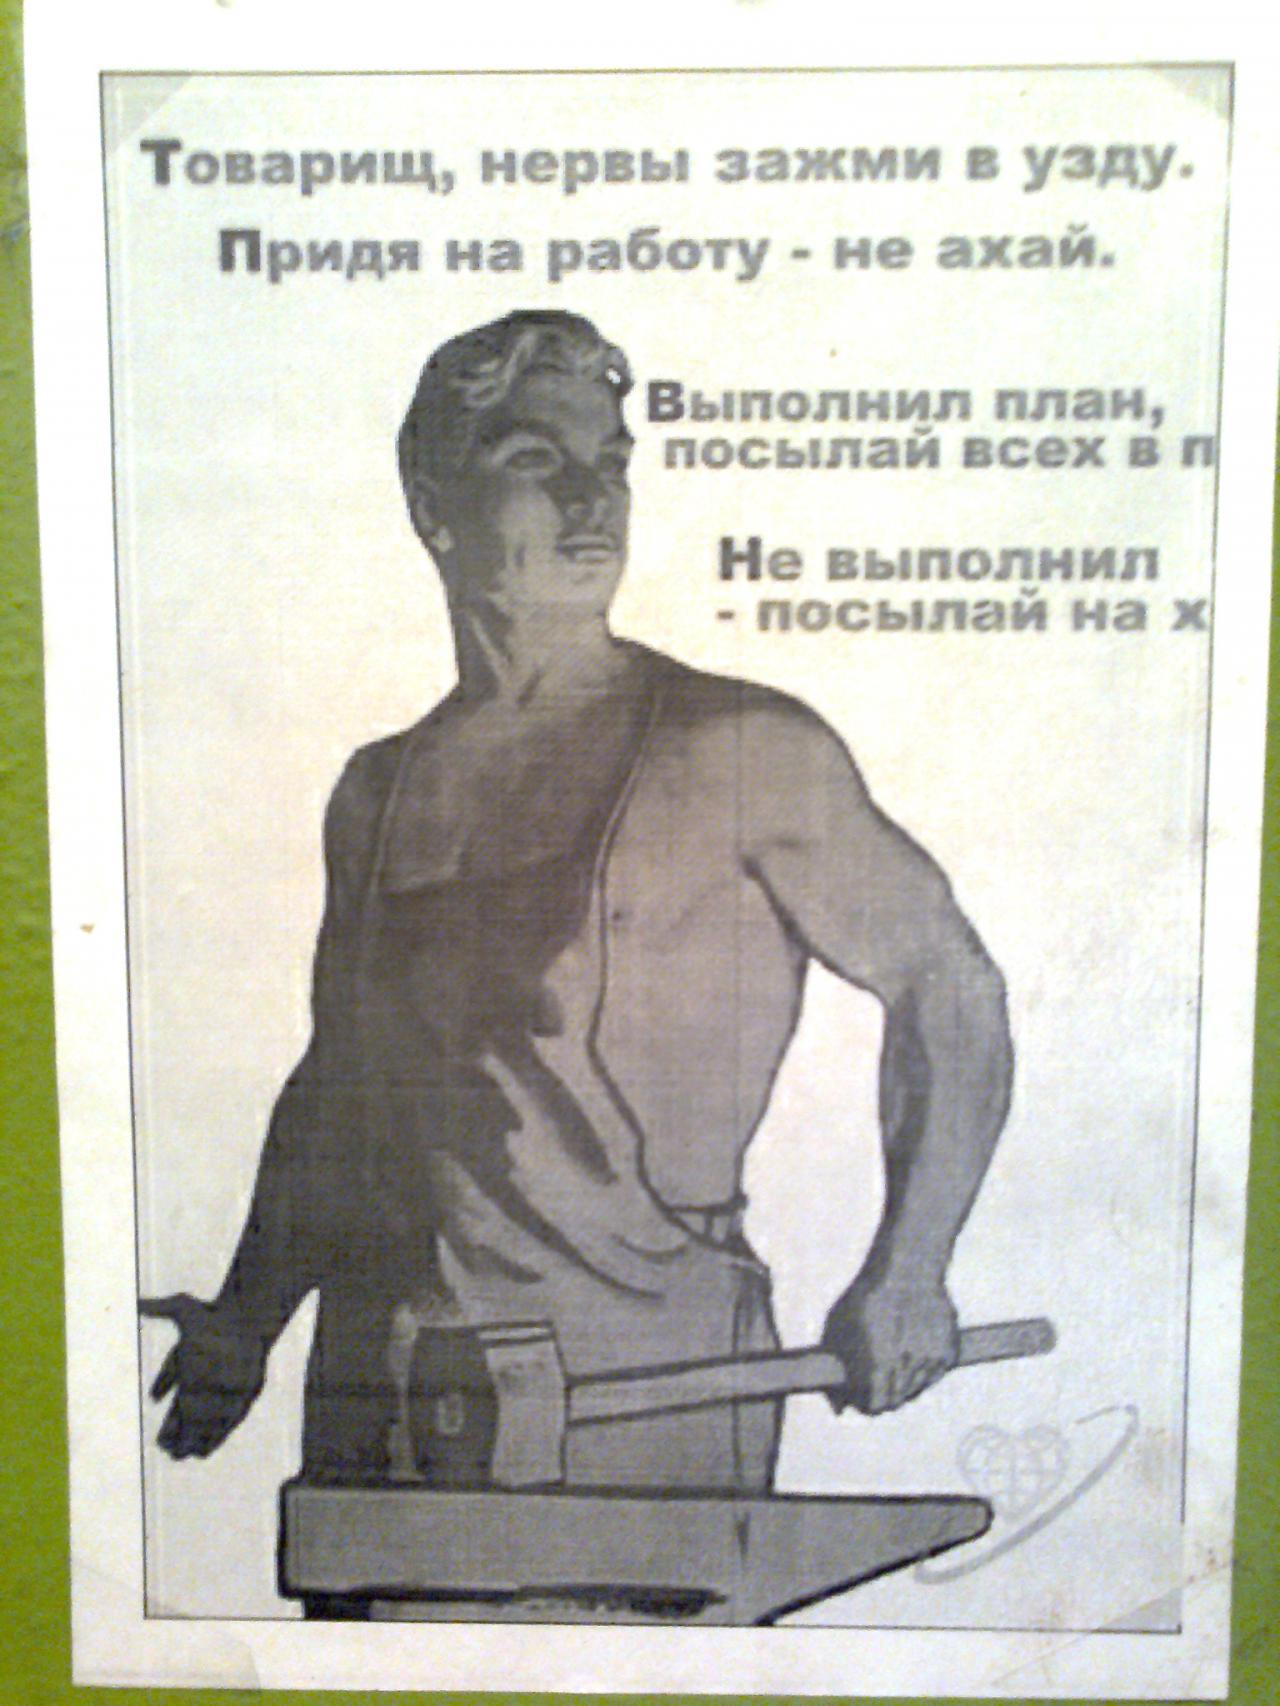 Плакат скорее бы на работу. Веселые плакаты. Прикольные плакаты про работу. Шуточные плакаты. Прикольные советские плакаты.